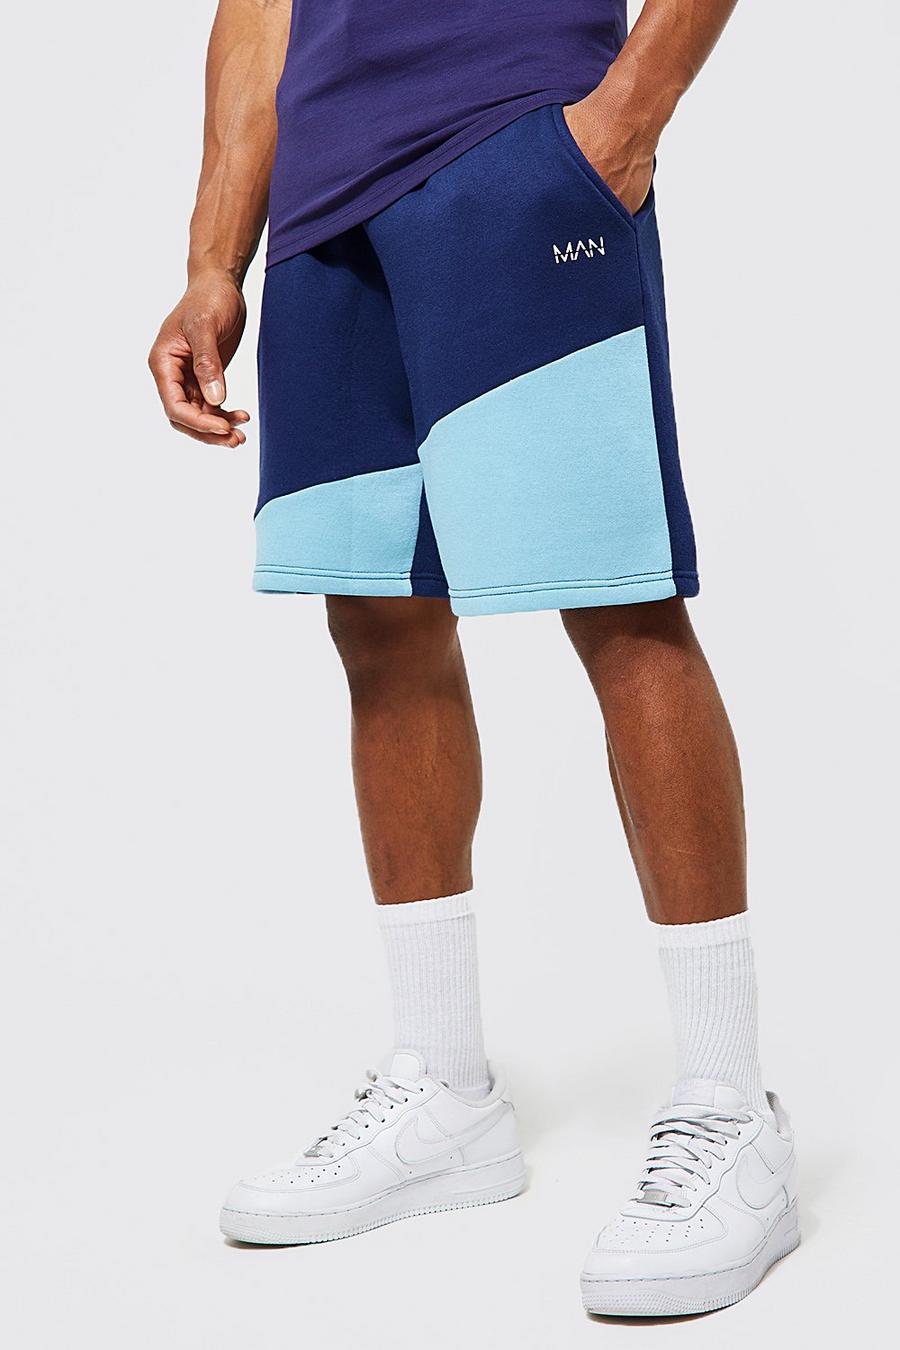 Navy marine Oversized Man Colour Block Jersey Shorts